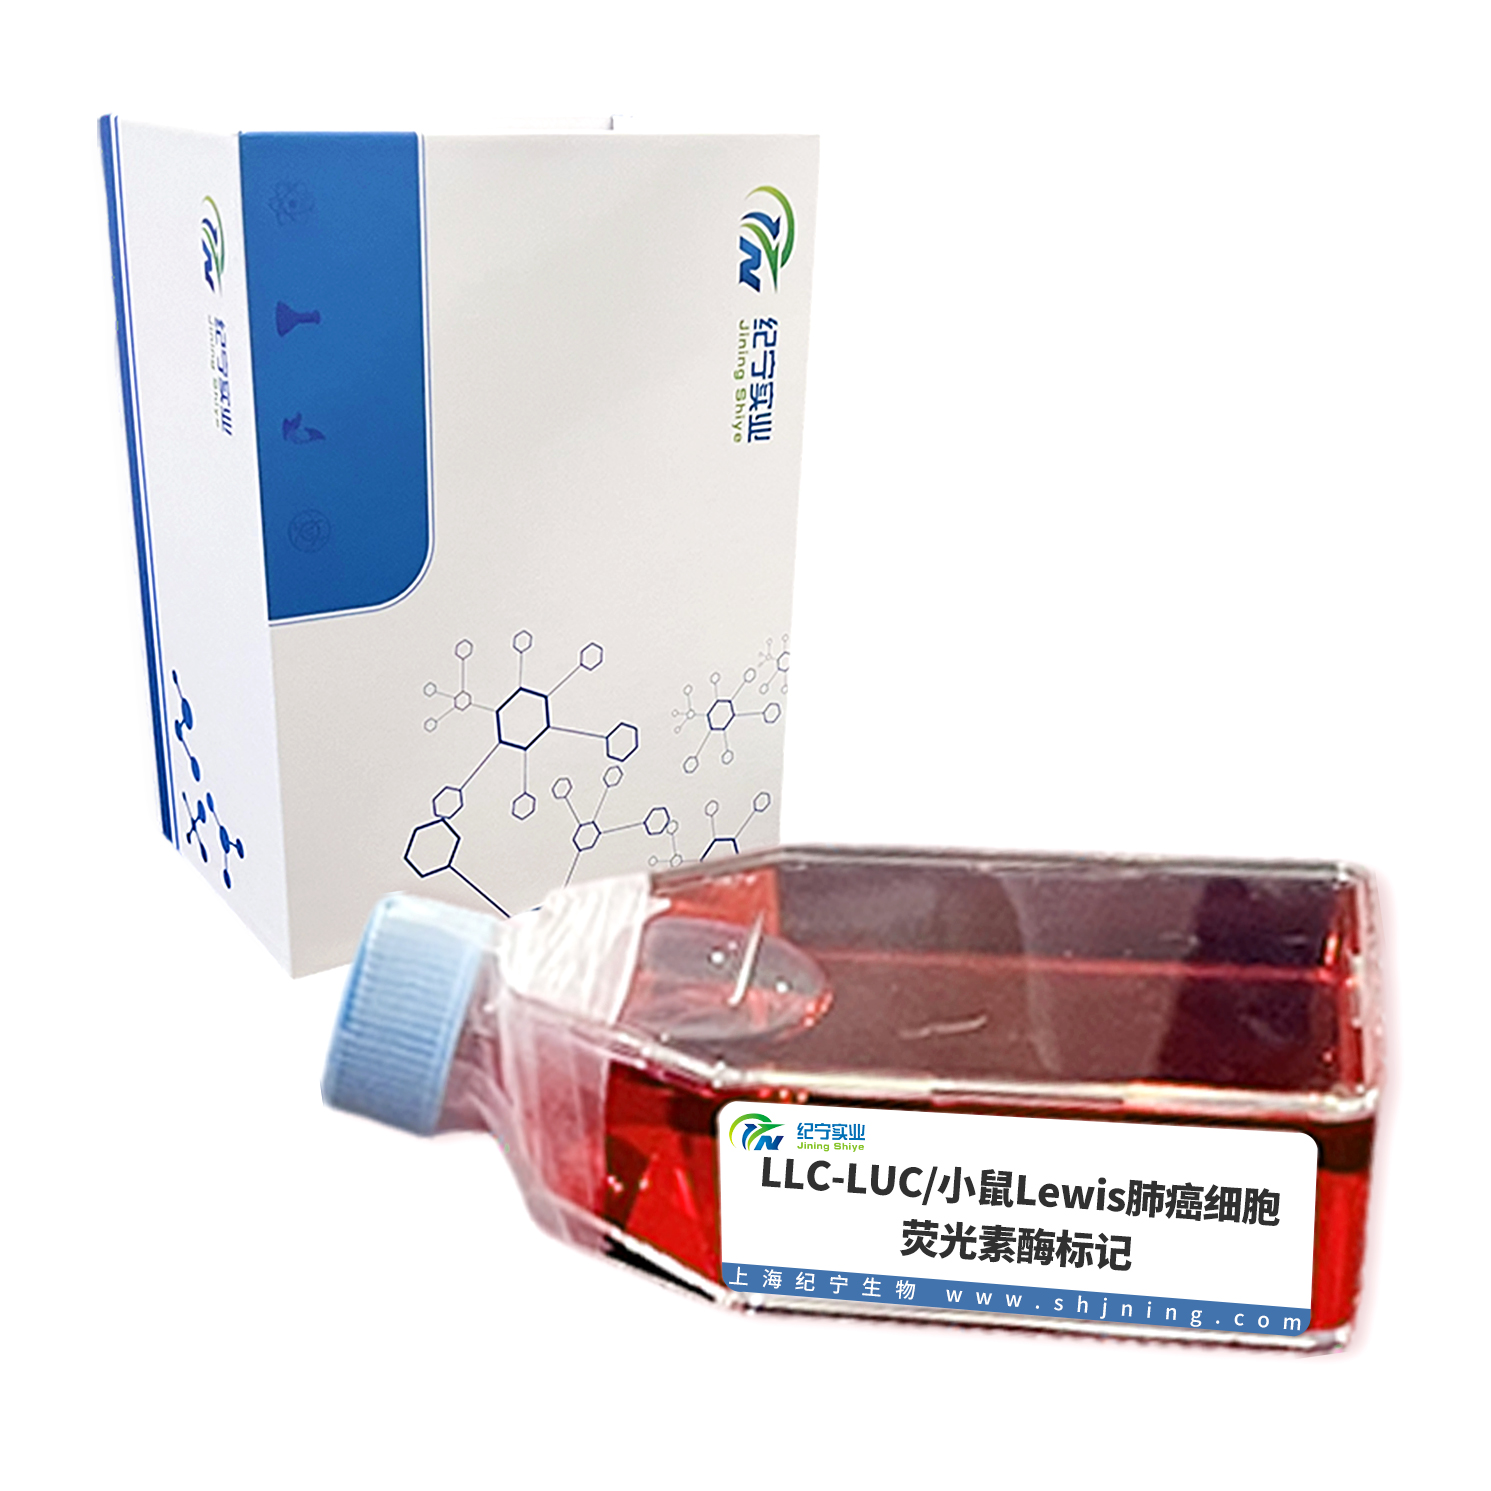 LLC-LUC/小鼠Lewis肺癌细胞-荧光素酶标记